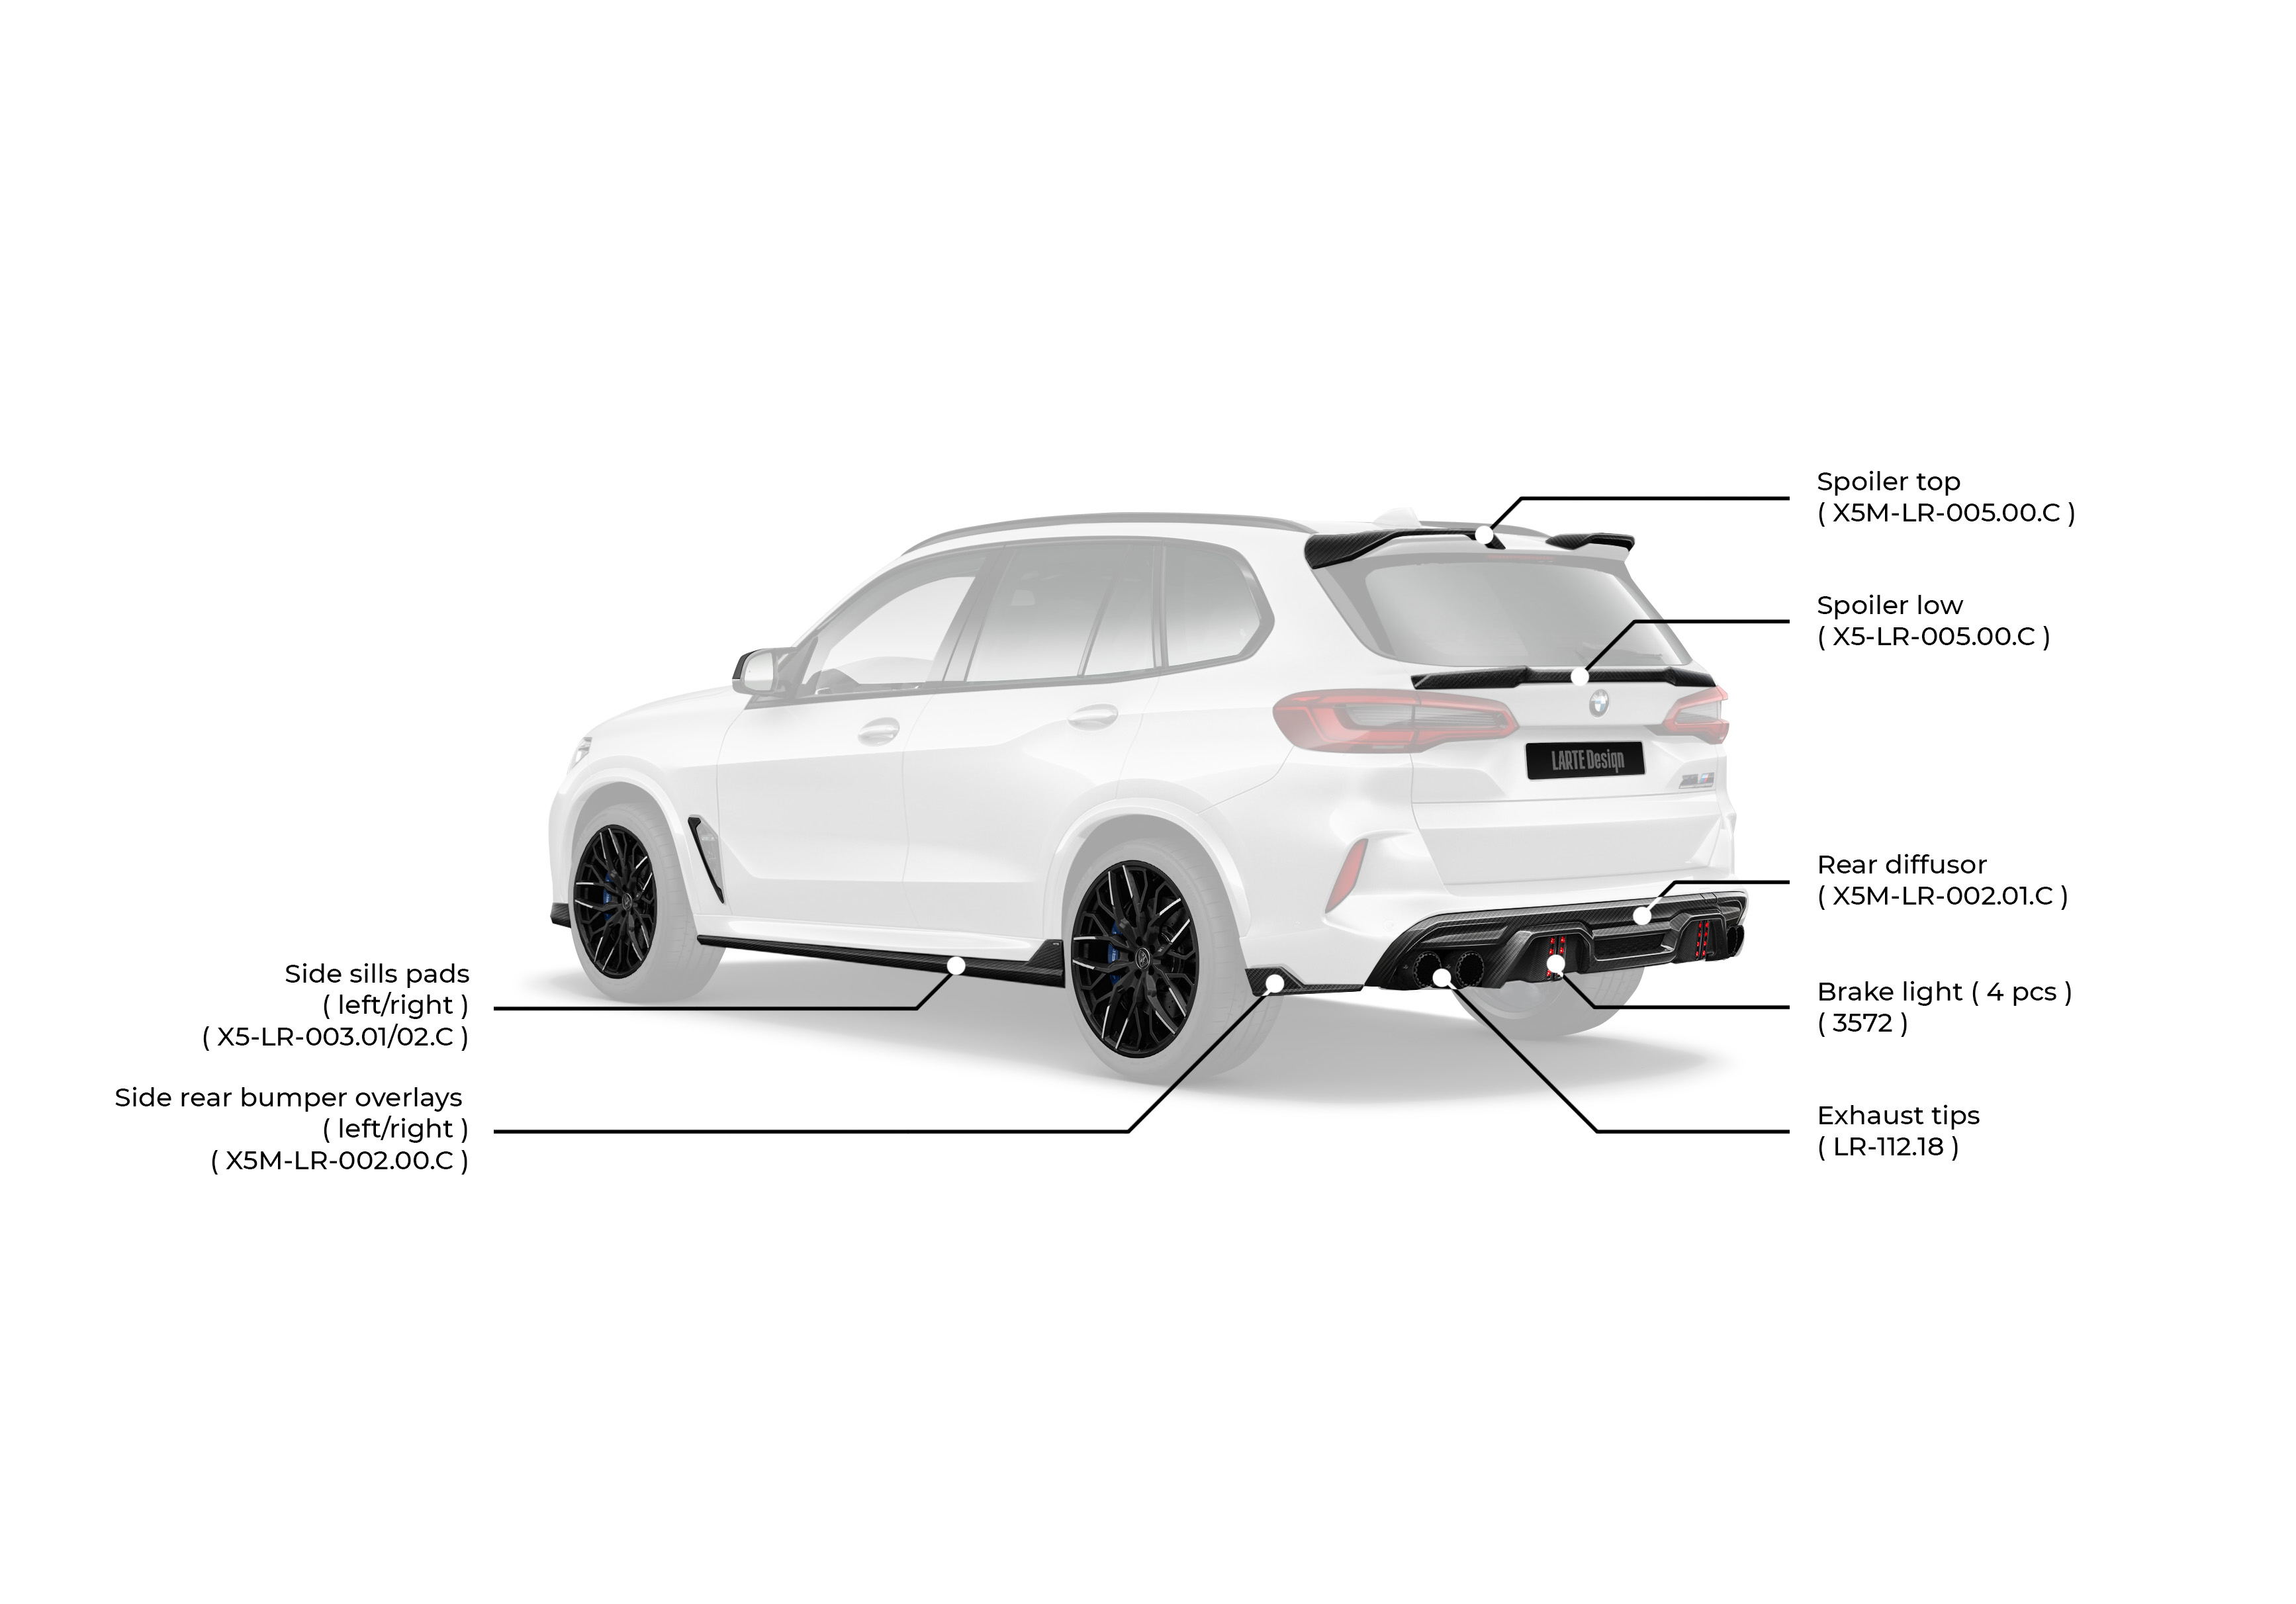 BMW X5 - Detailing design